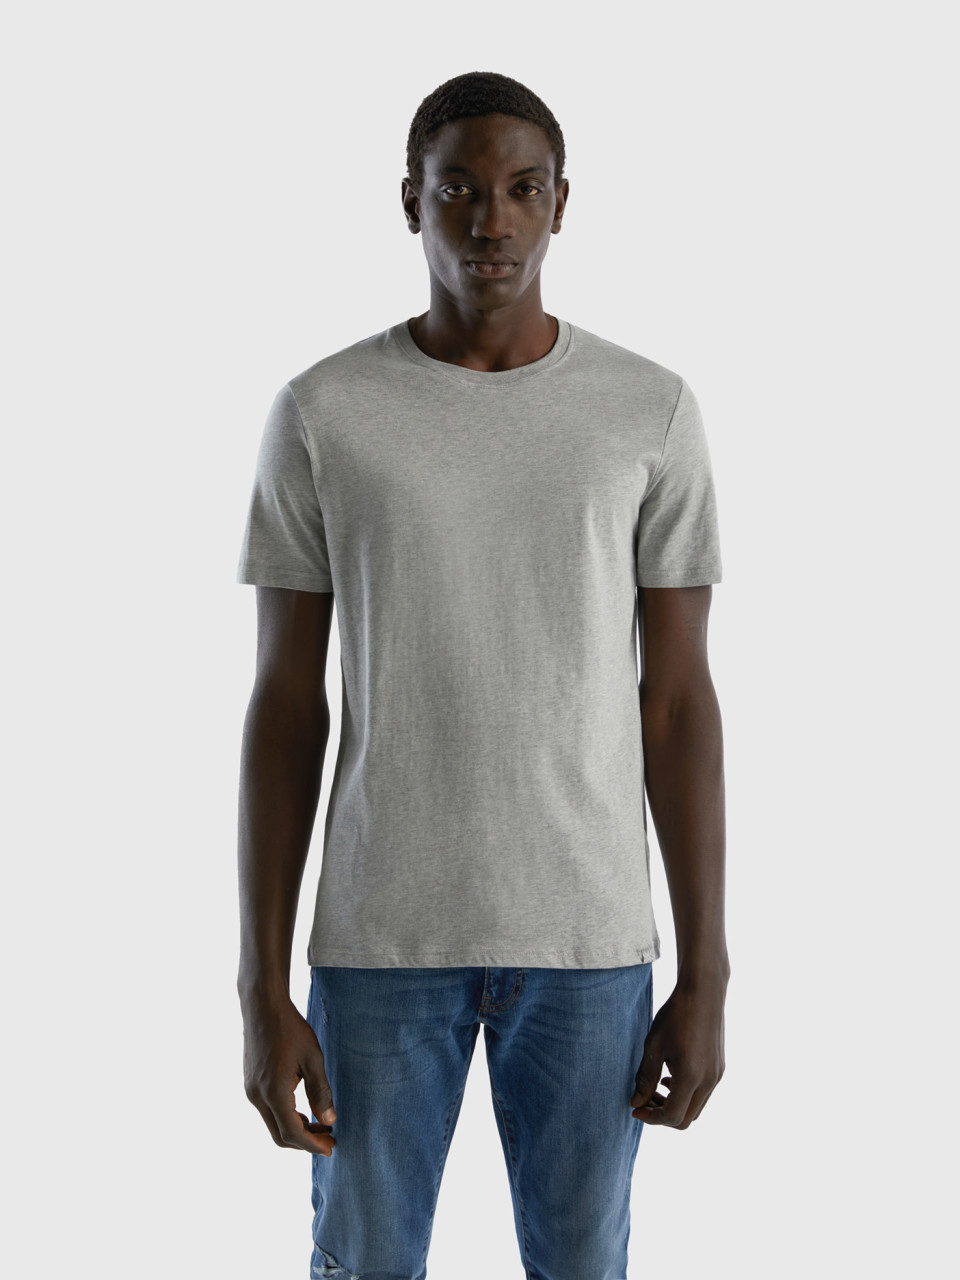 Benetton, Mélange Gray T-shirt, Light Gray, Men